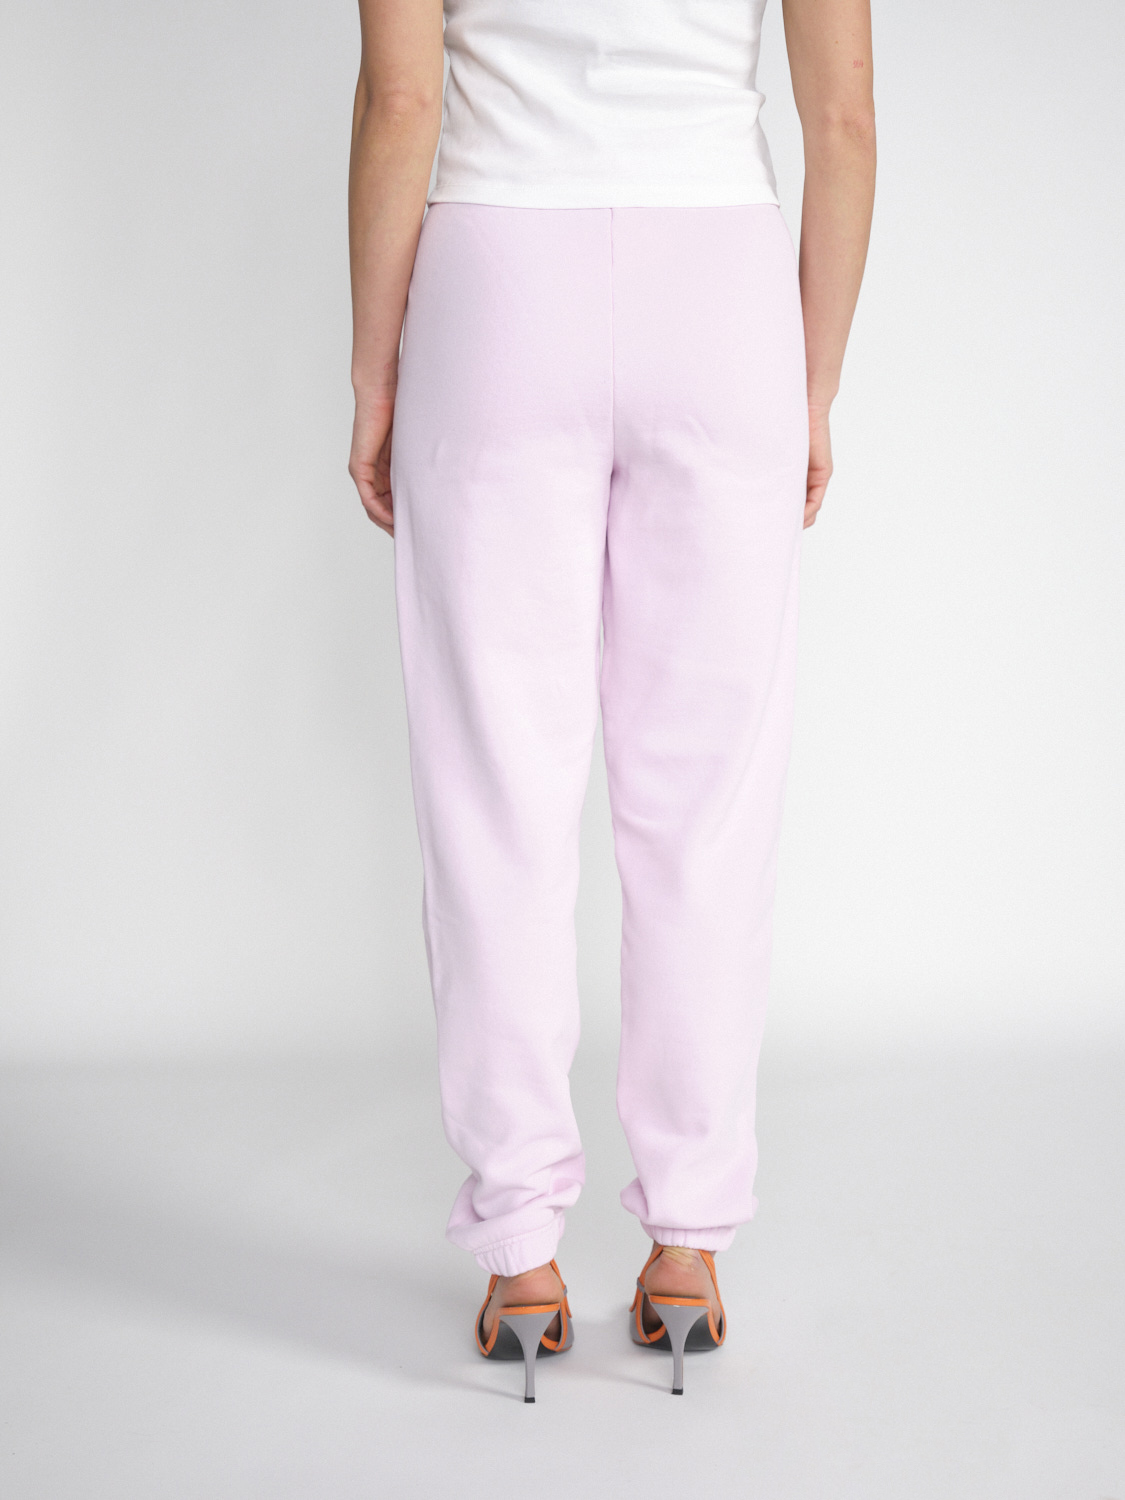 Coperni Sporty jogging pants in a cotton blend rosa XS